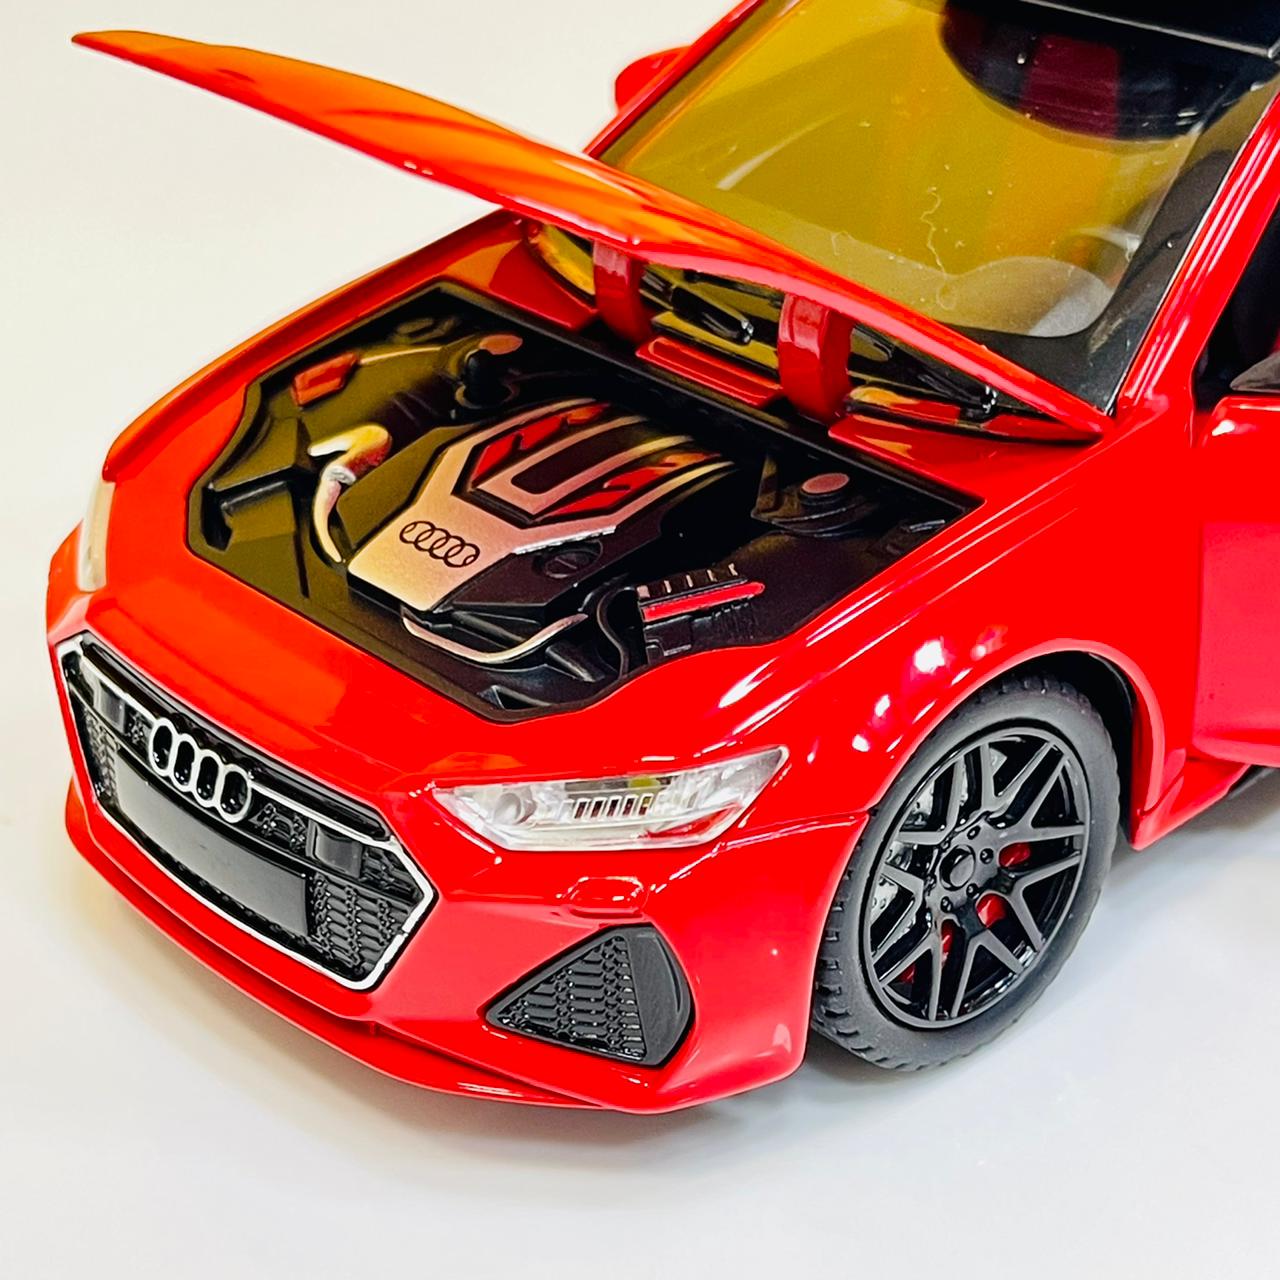 1:24 Diecast Audi RS6 Travel Edition